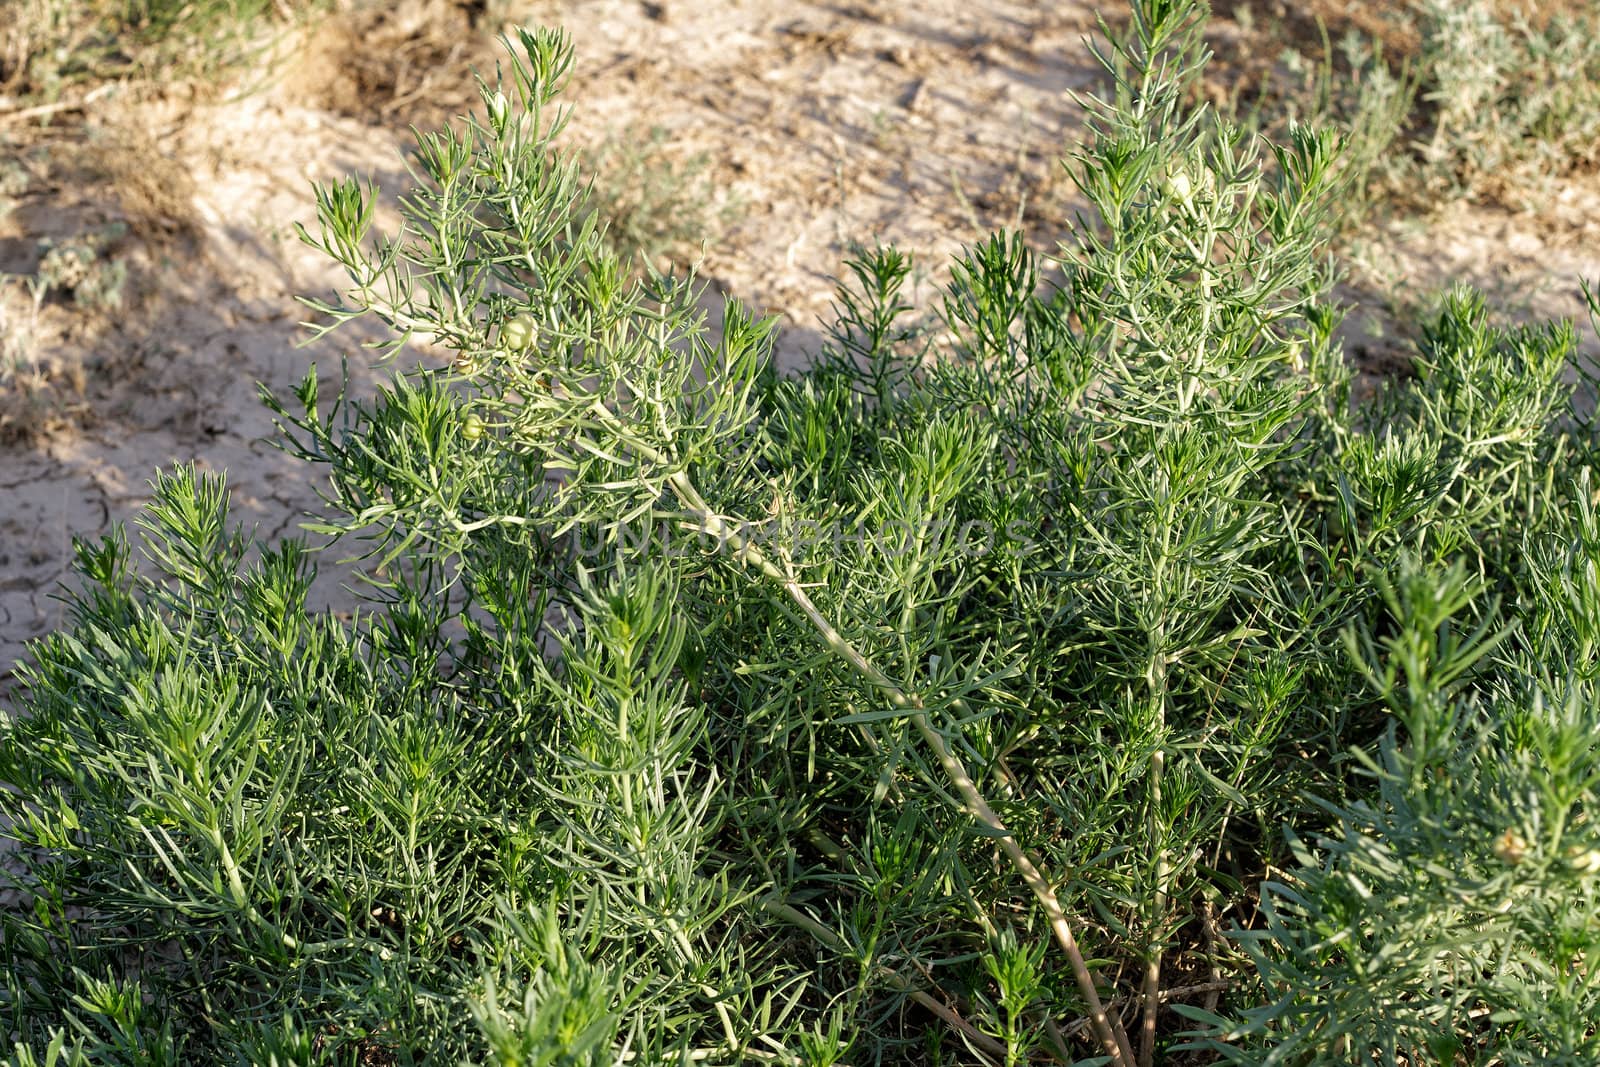 Closeup detail of the foliage of the Sagebrush , or Artemisia tridentata, a shrub found in arid regions